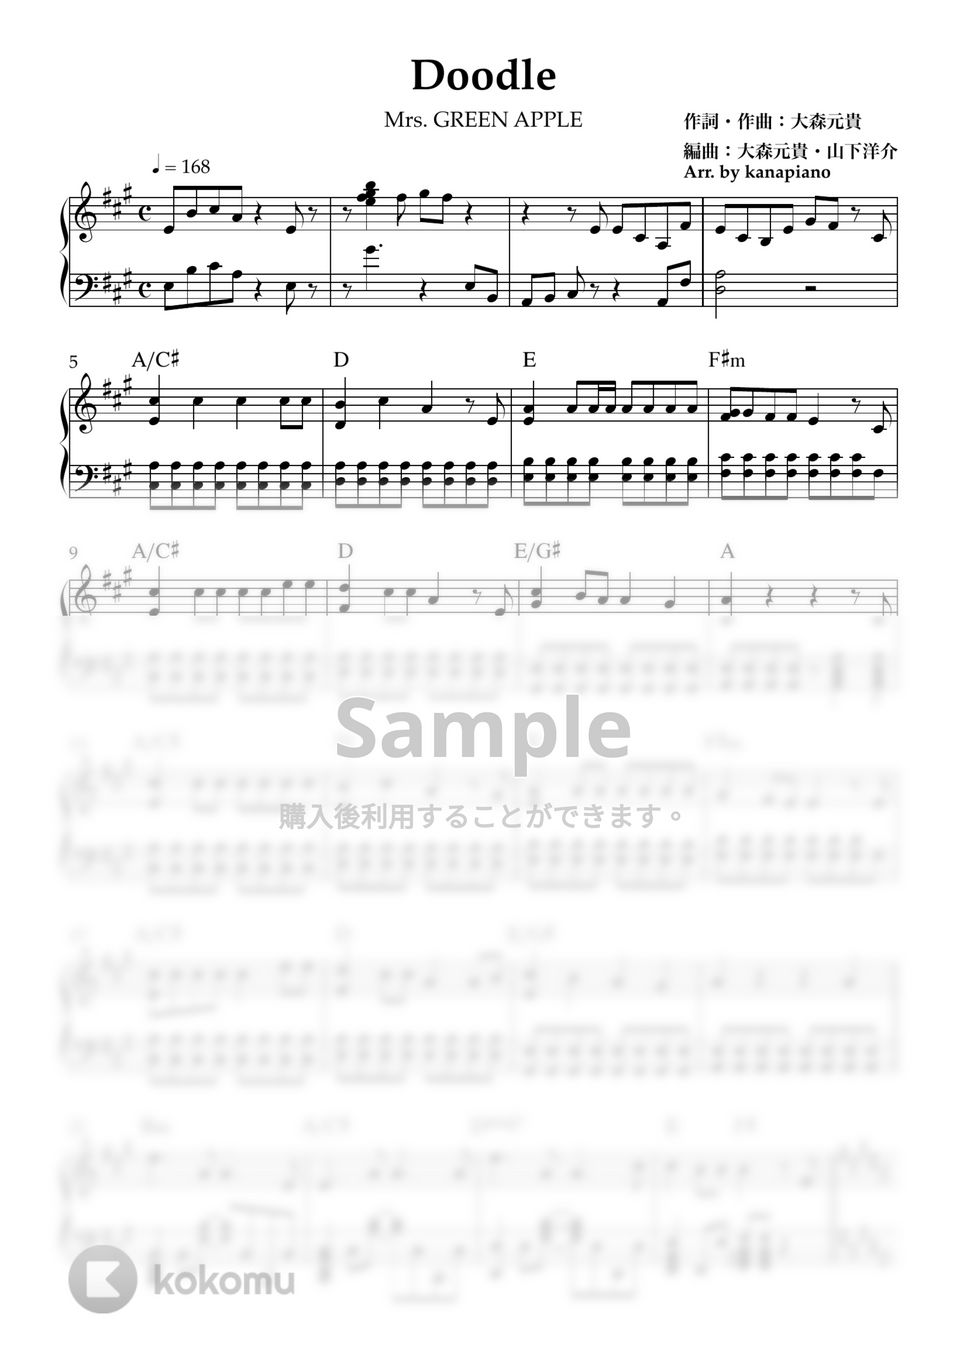 Mrs. GREEN APPLE - Doodle (ピアノソロ) by kanapiano